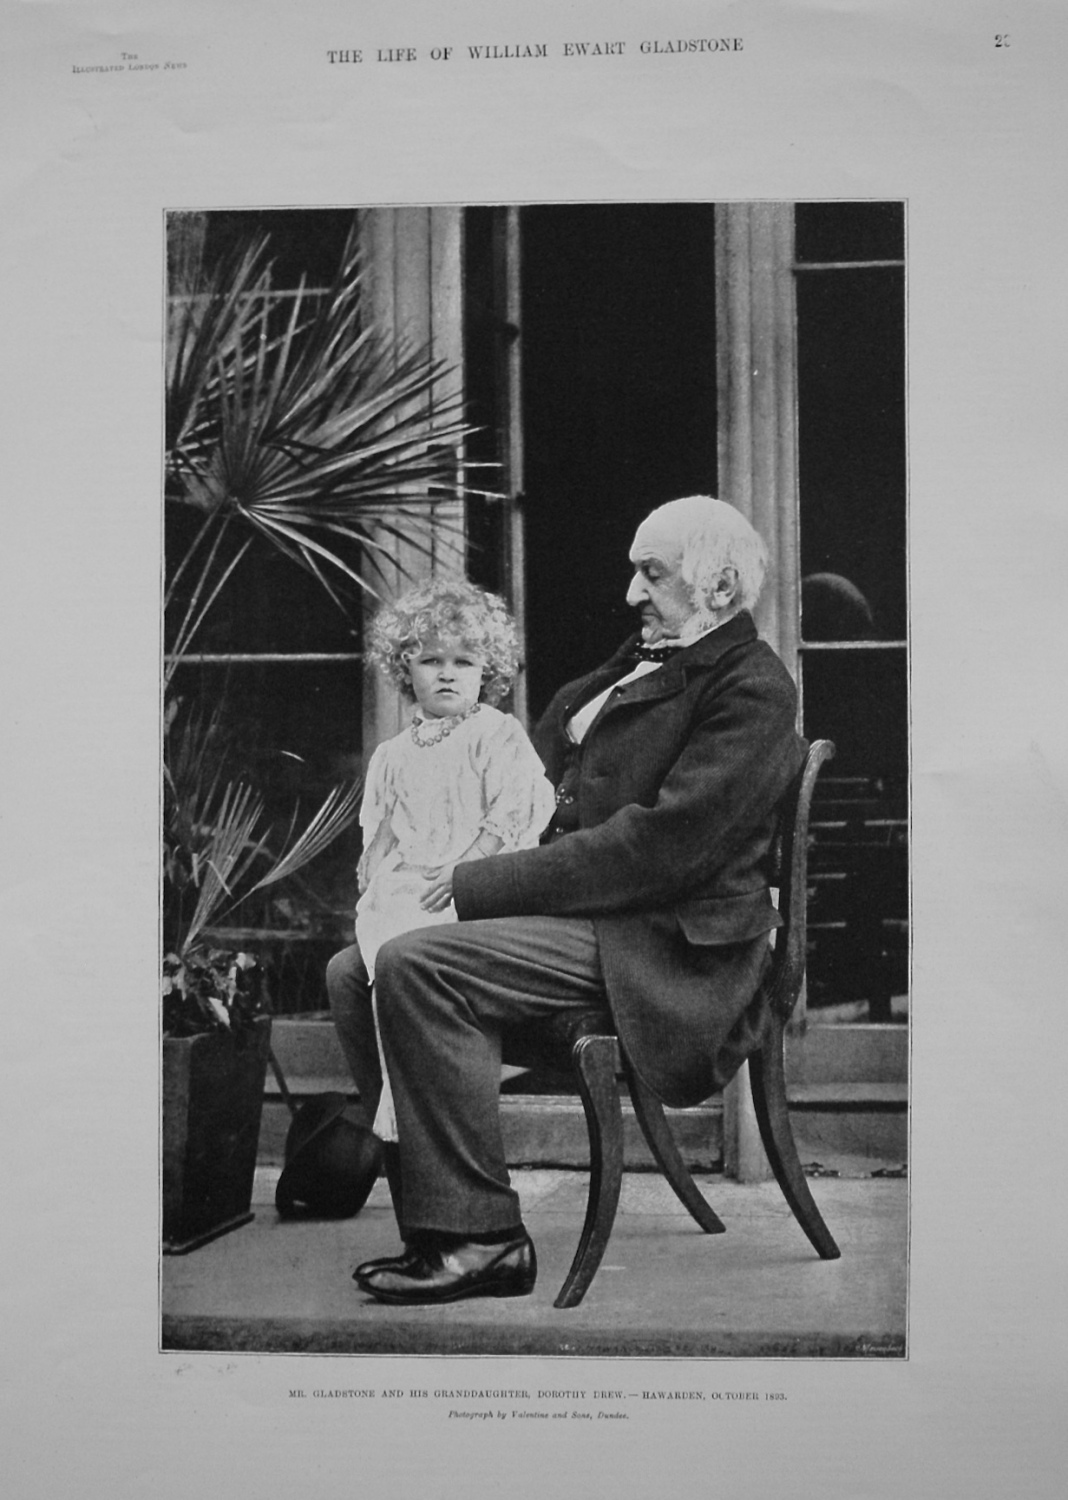 Mr. Gladstone and his Granddaughter, Dorothy Drew, - Hawarden, October 1893